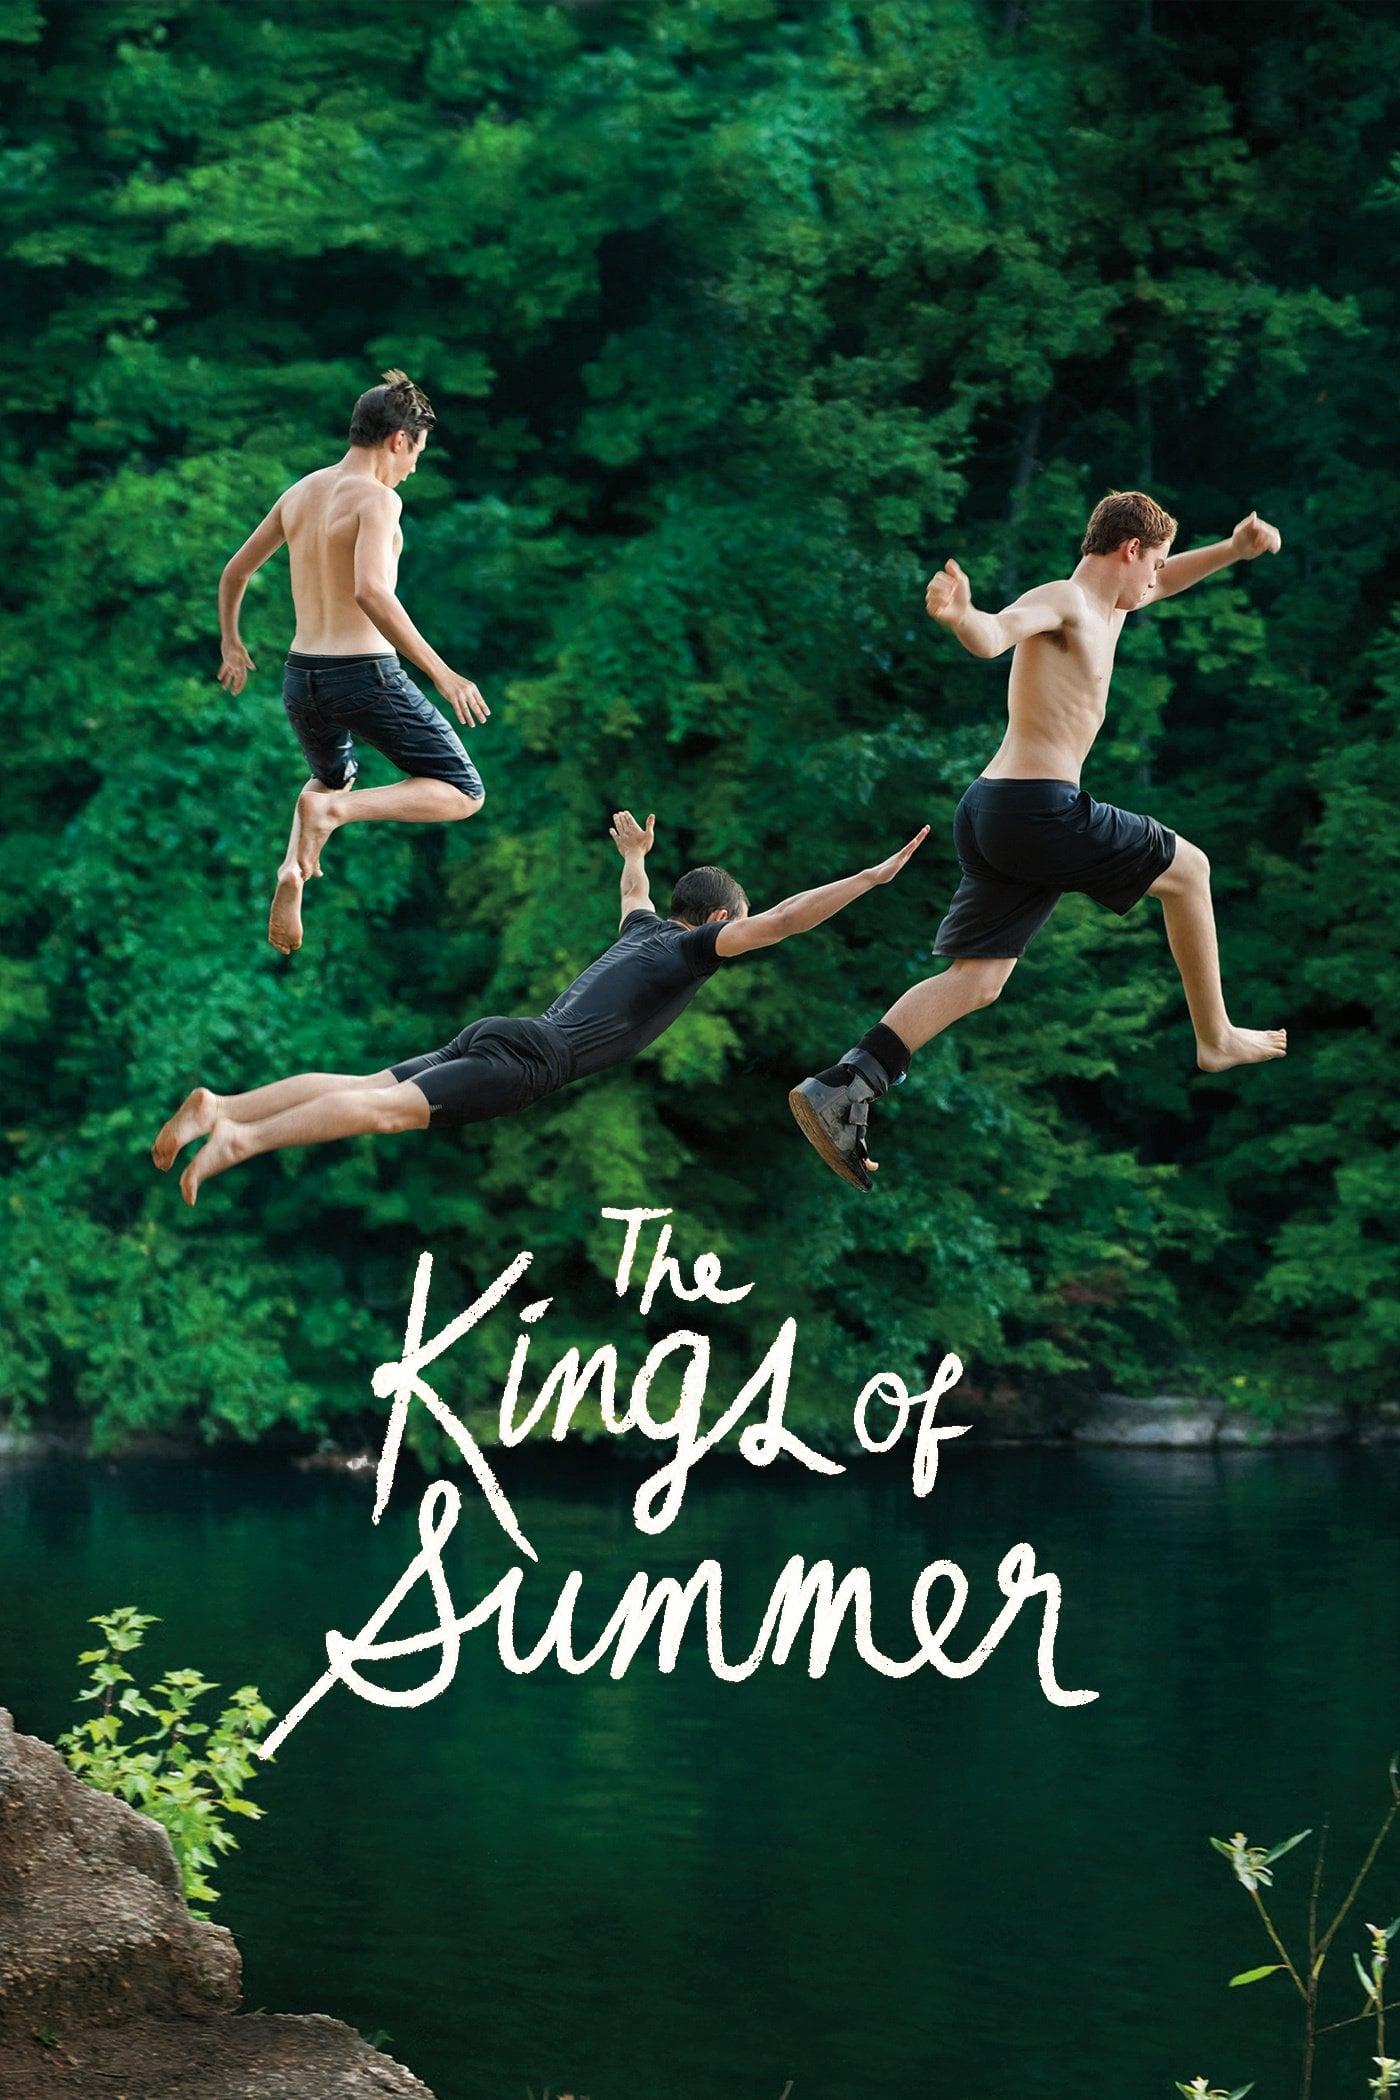 Kings of Summer poster